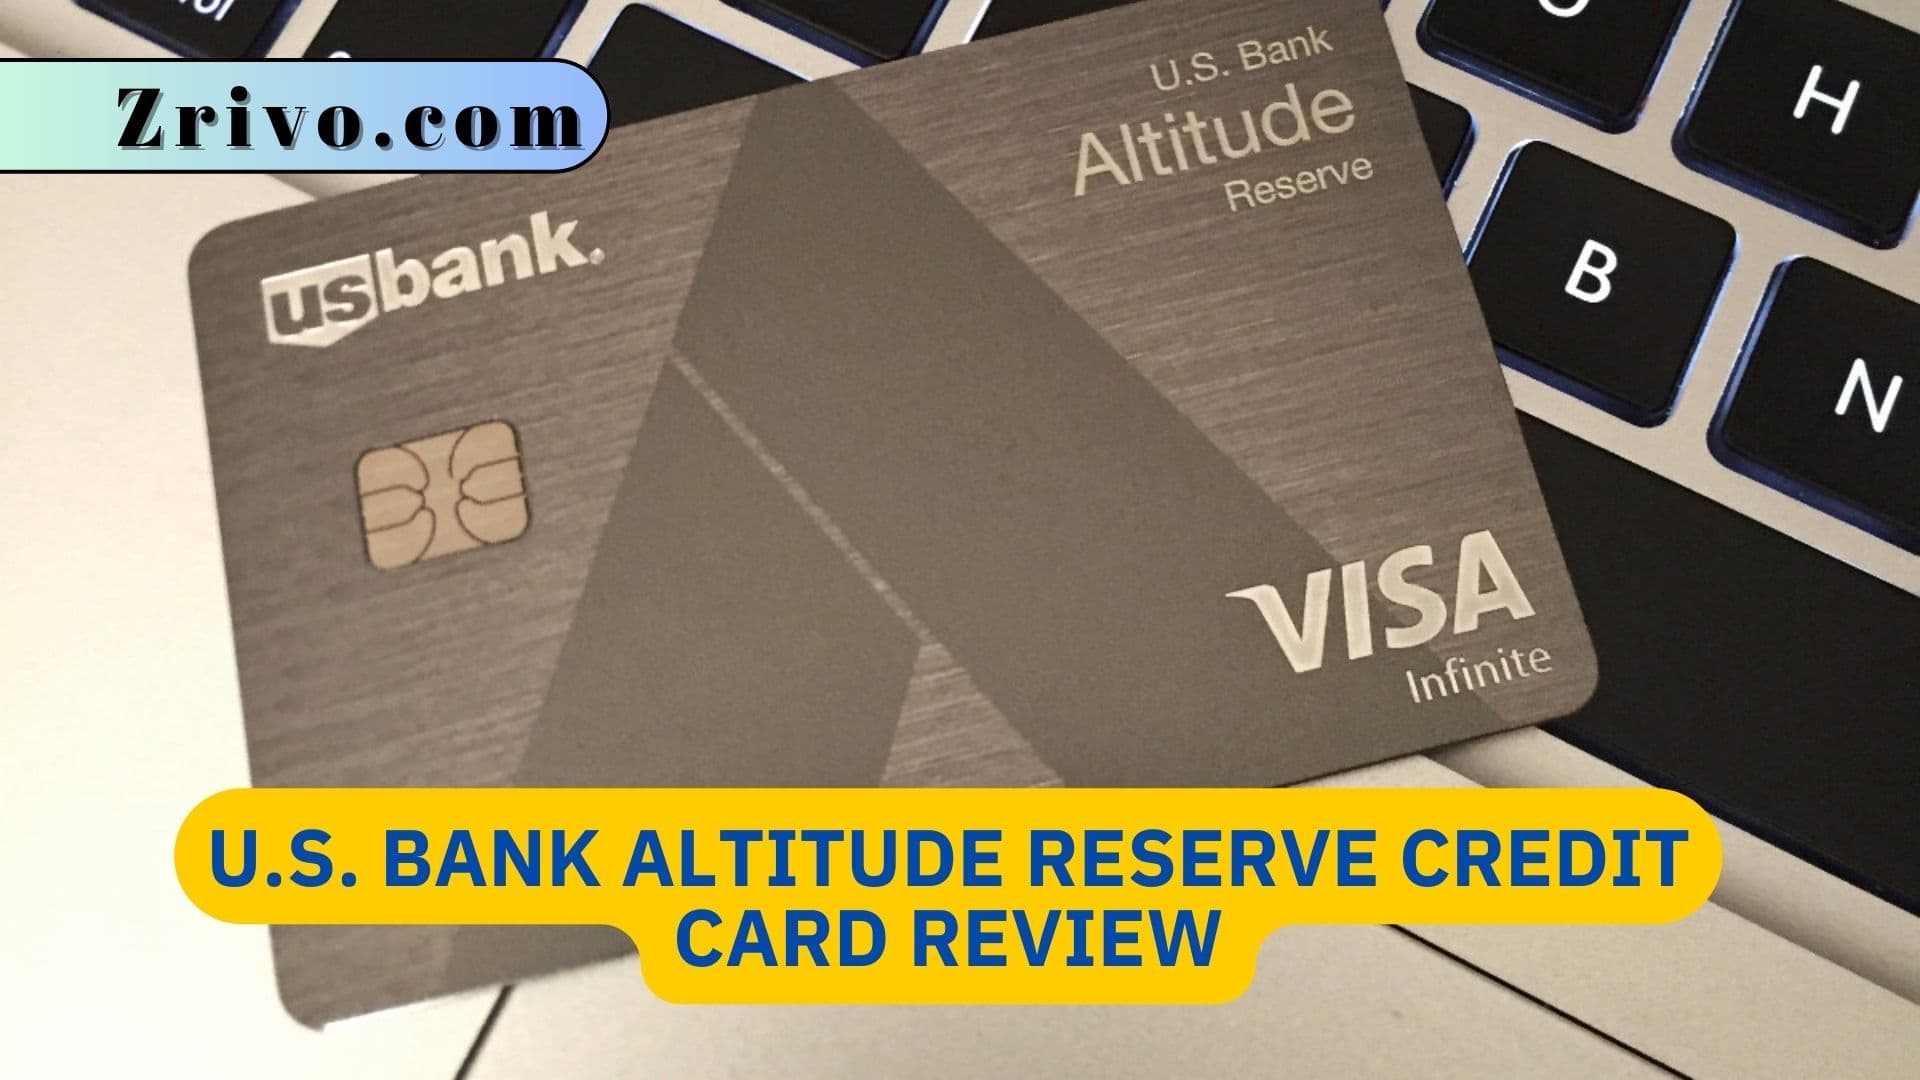 U.S. Bank Altitude Reserve Credit Card Review